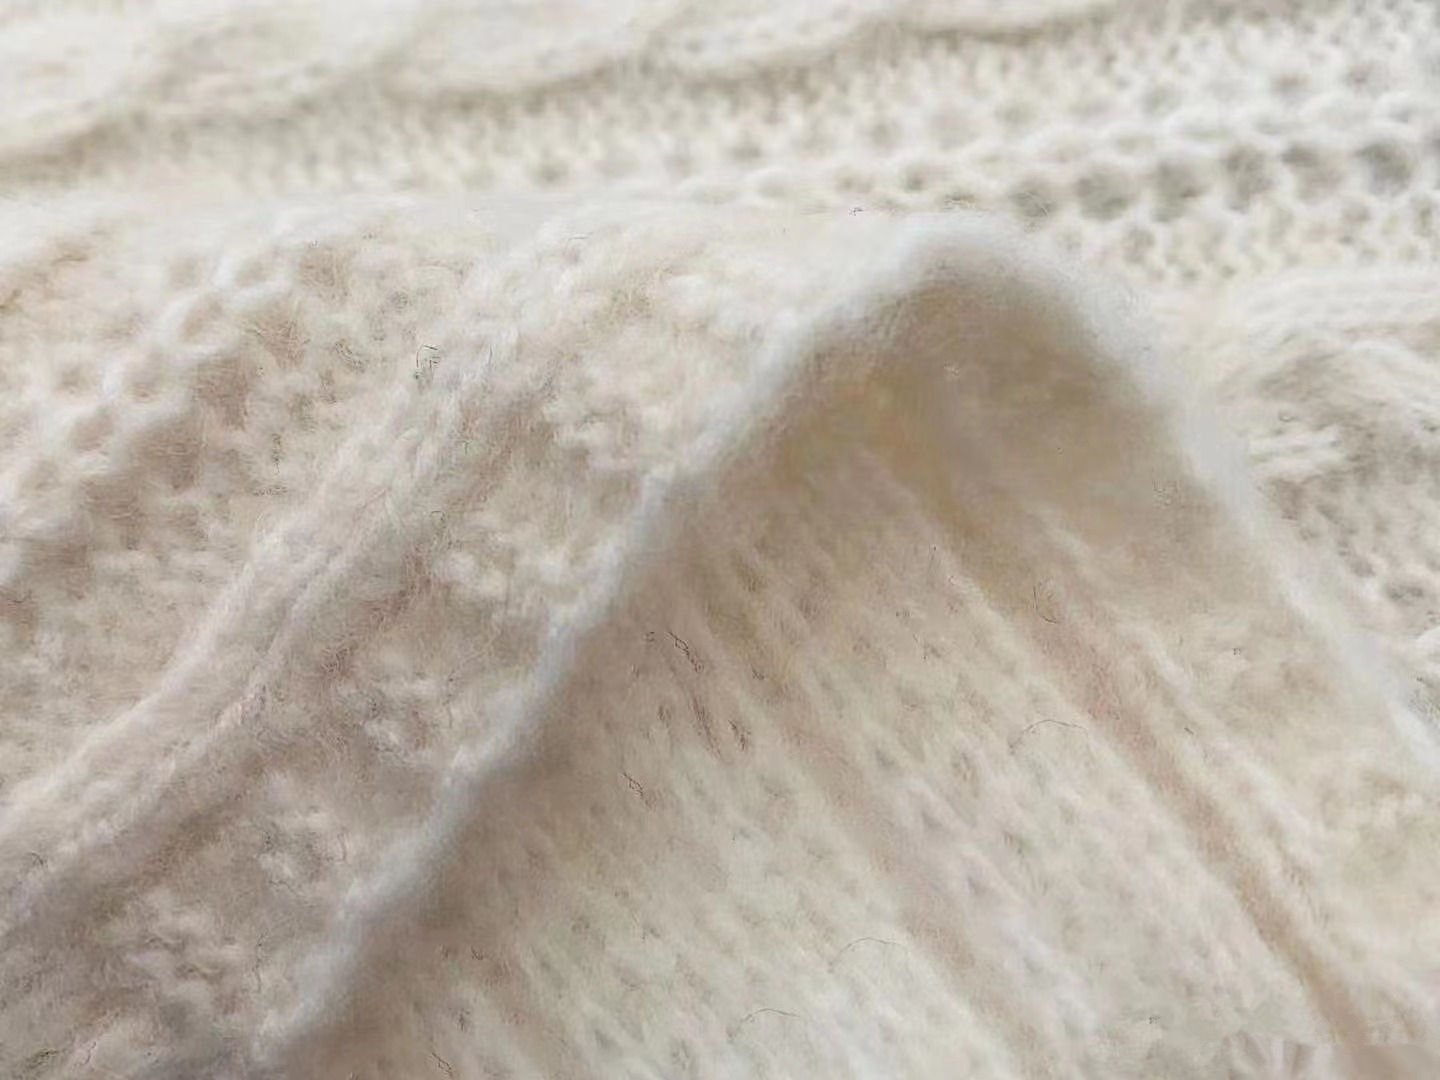 बहु रंग Crochet इंद्रधनुष यार्न बुनाई के लिए 5.5NM फैंसी यार्न - 2